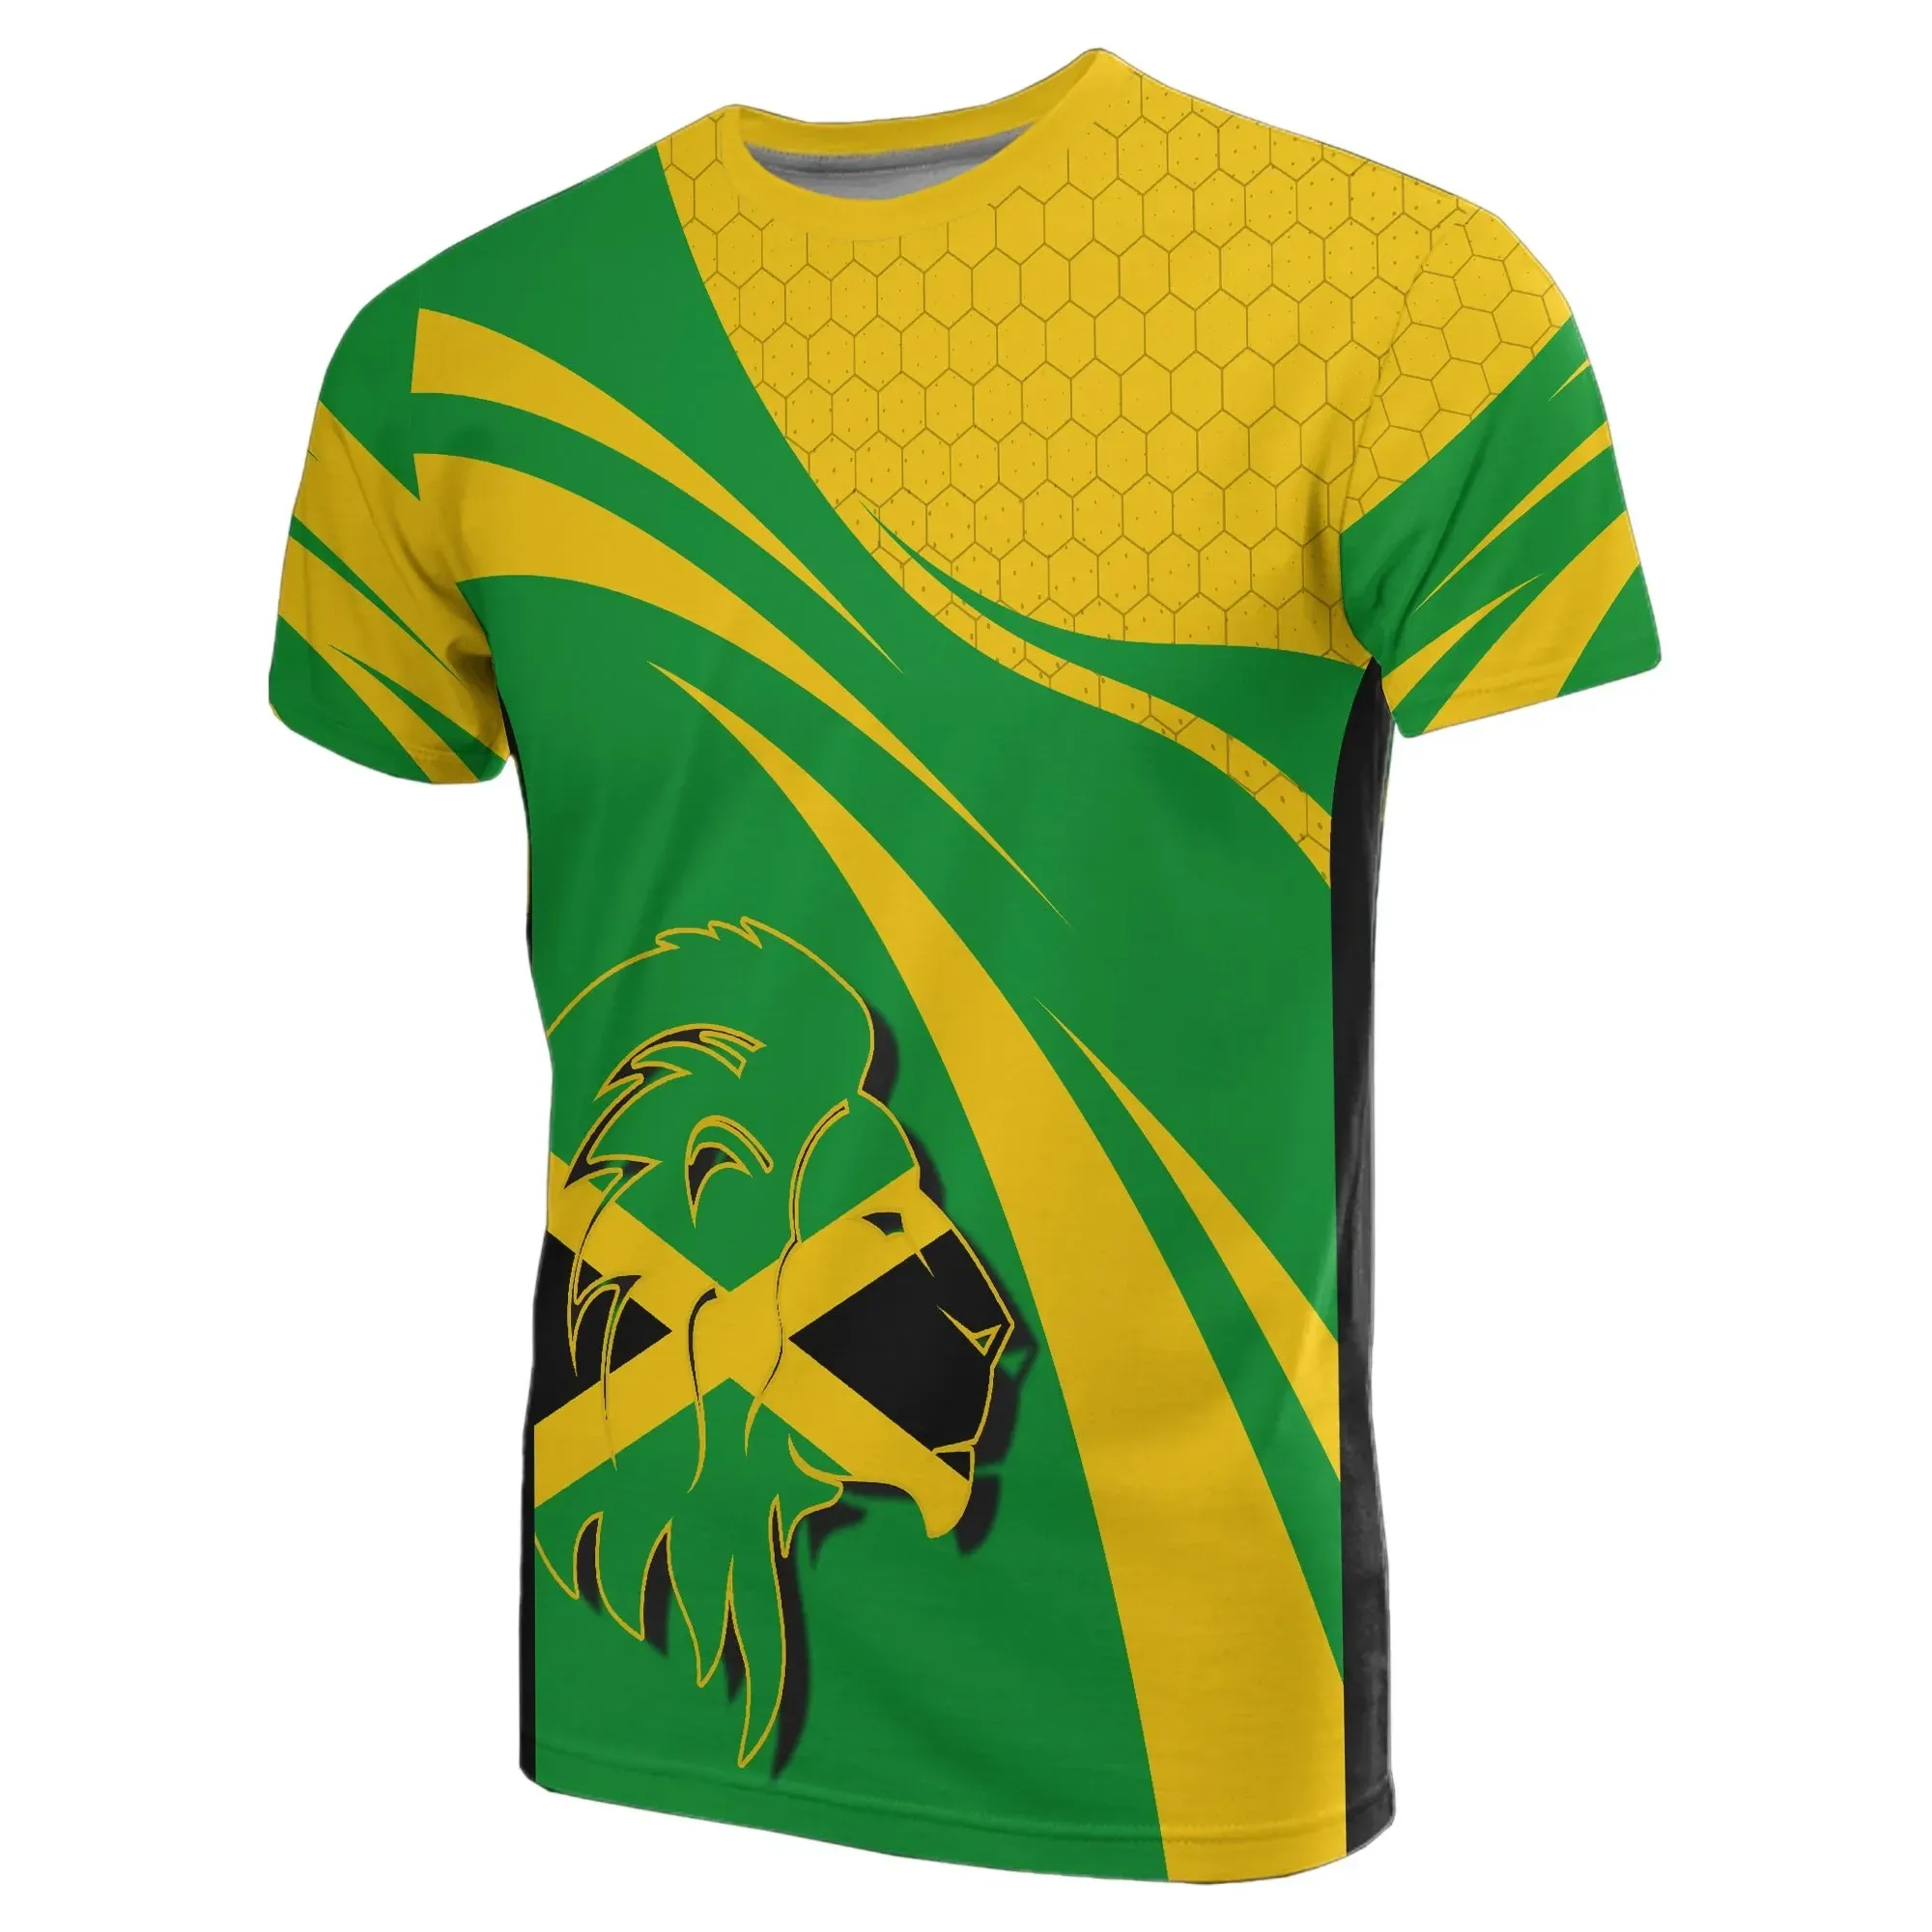 African T-shirt – Ankara Cloth Iremoje for Ogundele Sport Style Tee